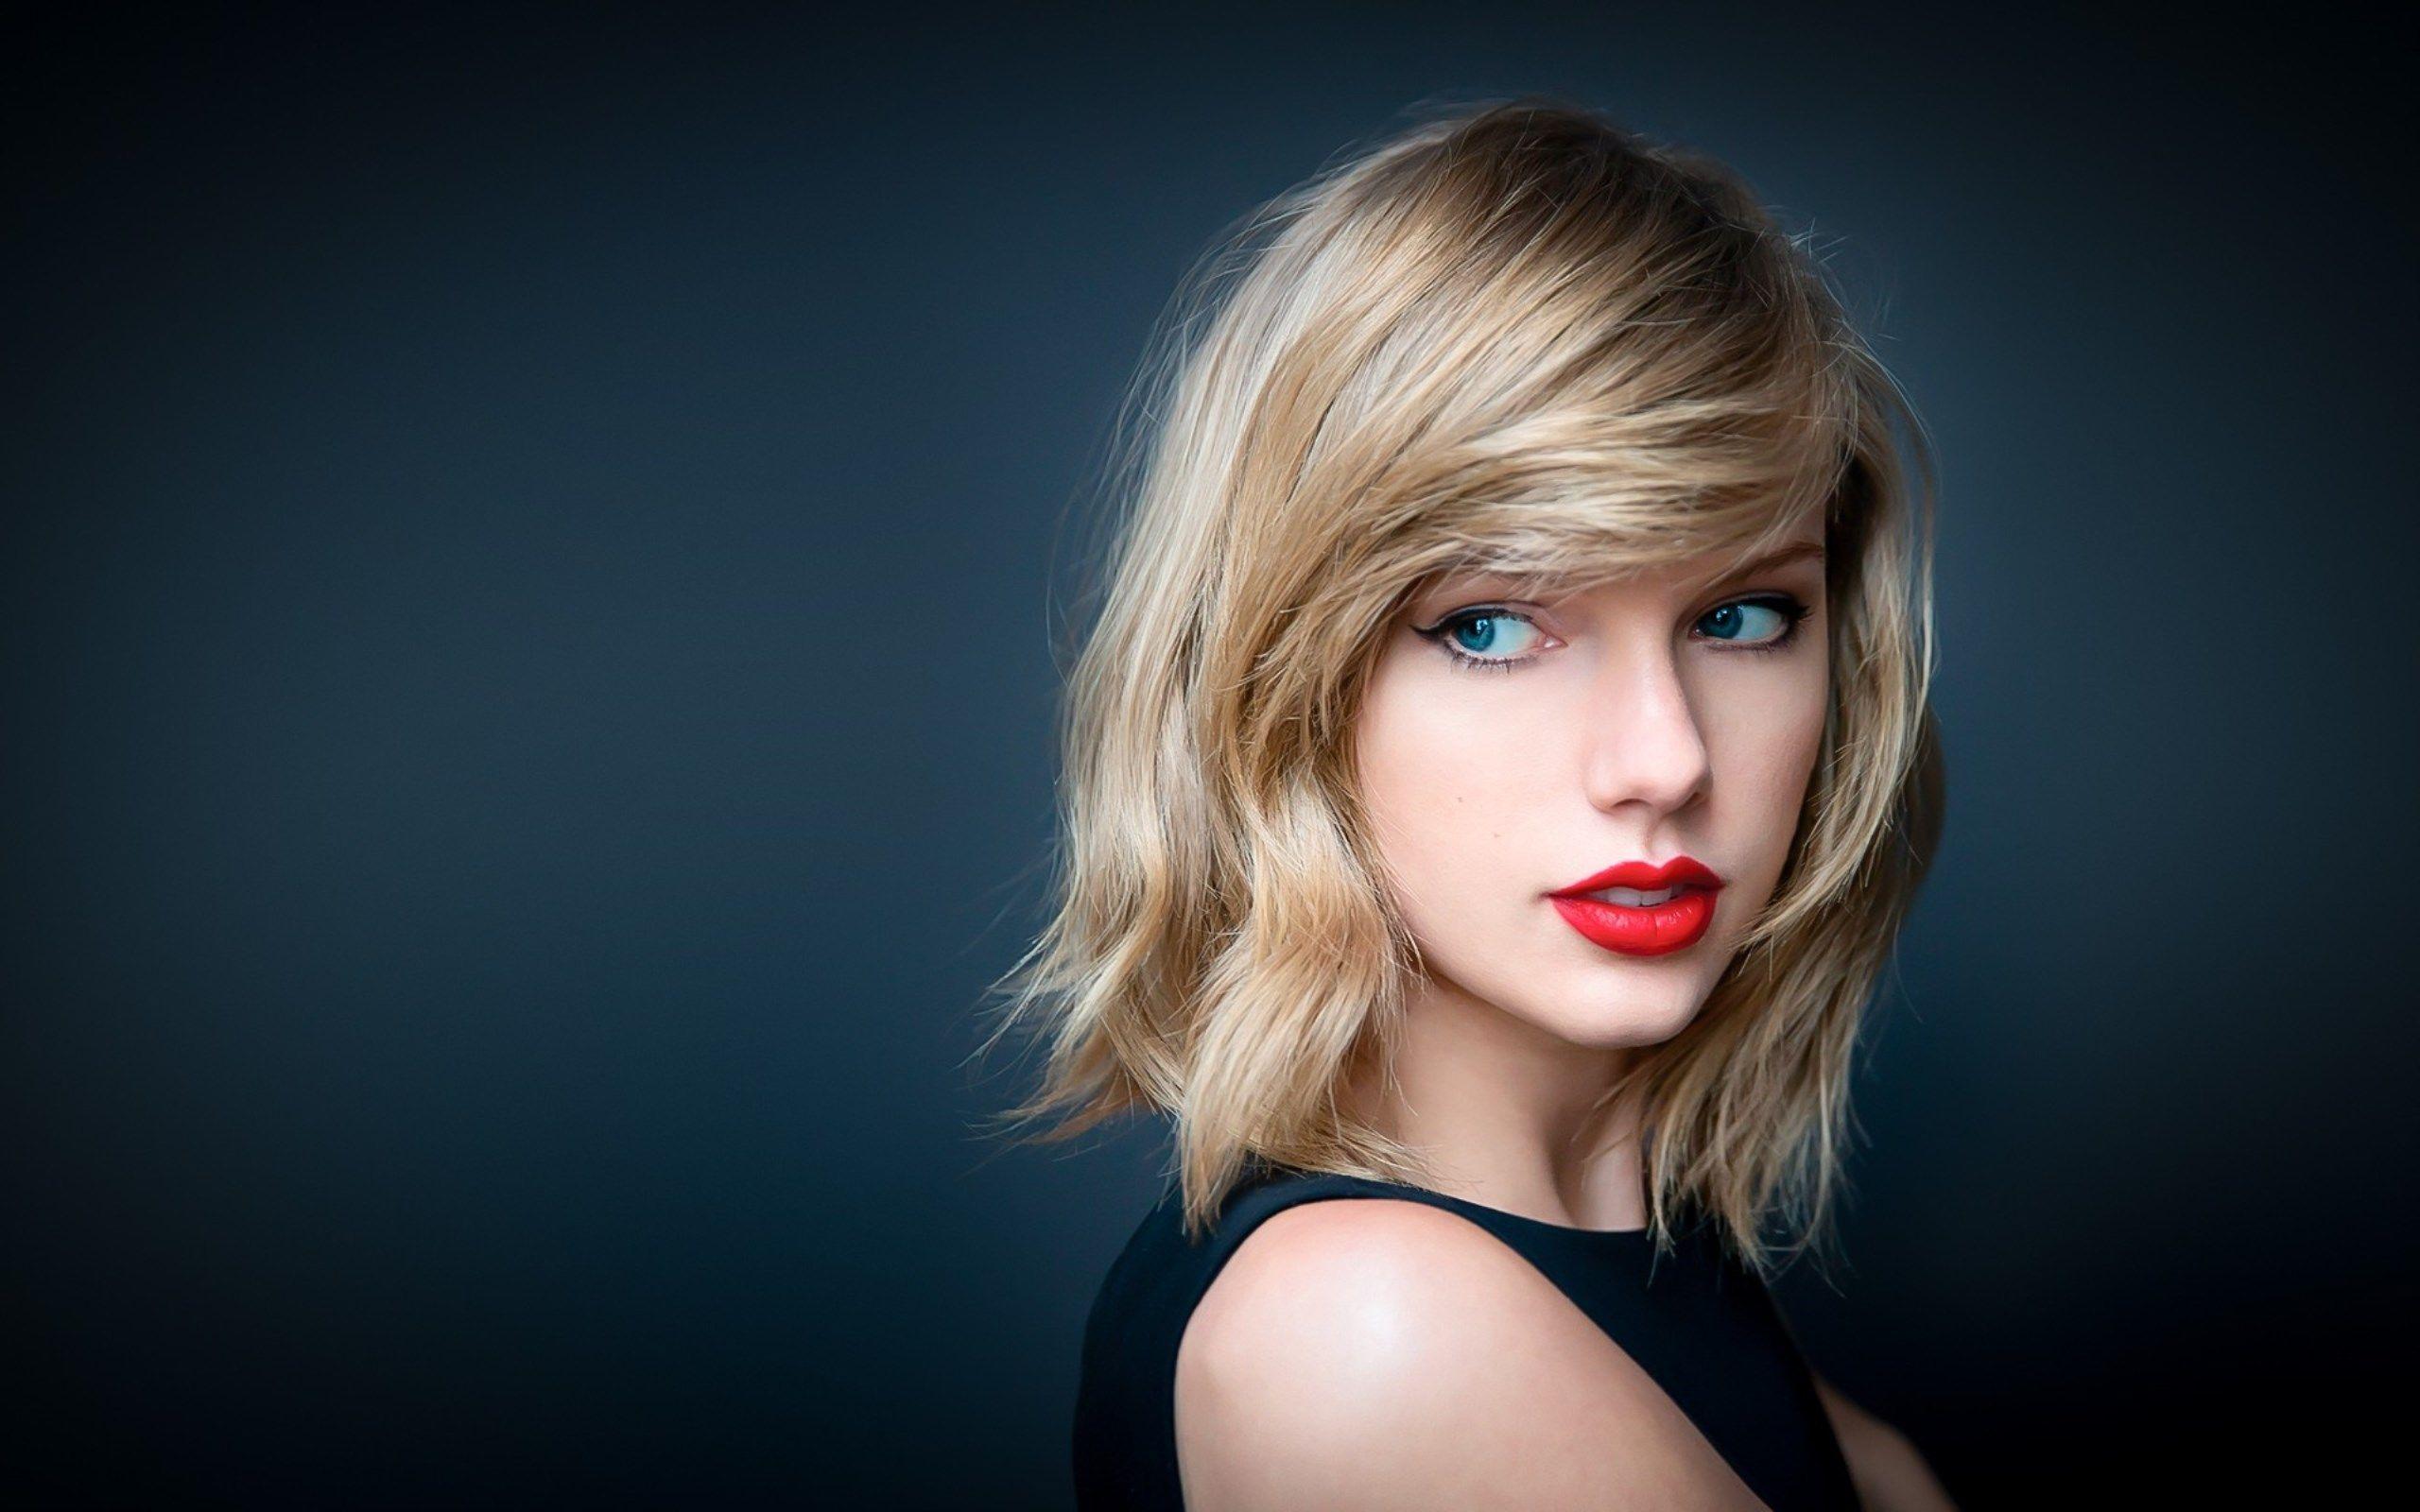 Music Taylor Swift wallpaper (Desktop, Phone, Tablet)